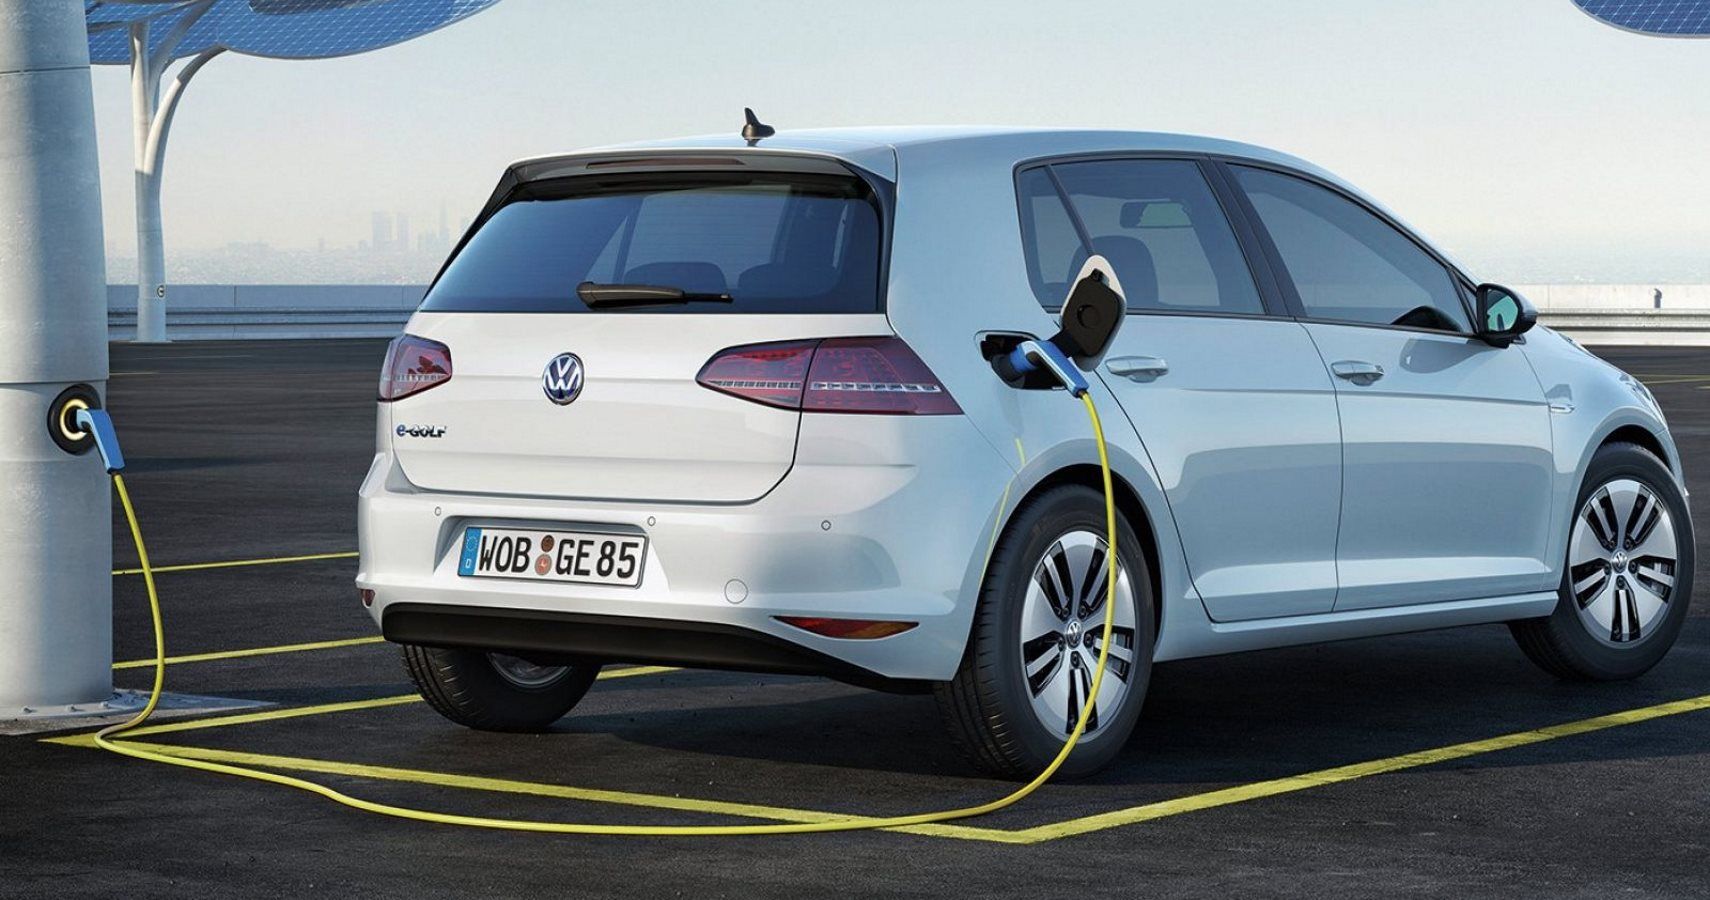 Volkswagen Says Next-Gen Internal Combustion Engines Will Be Last